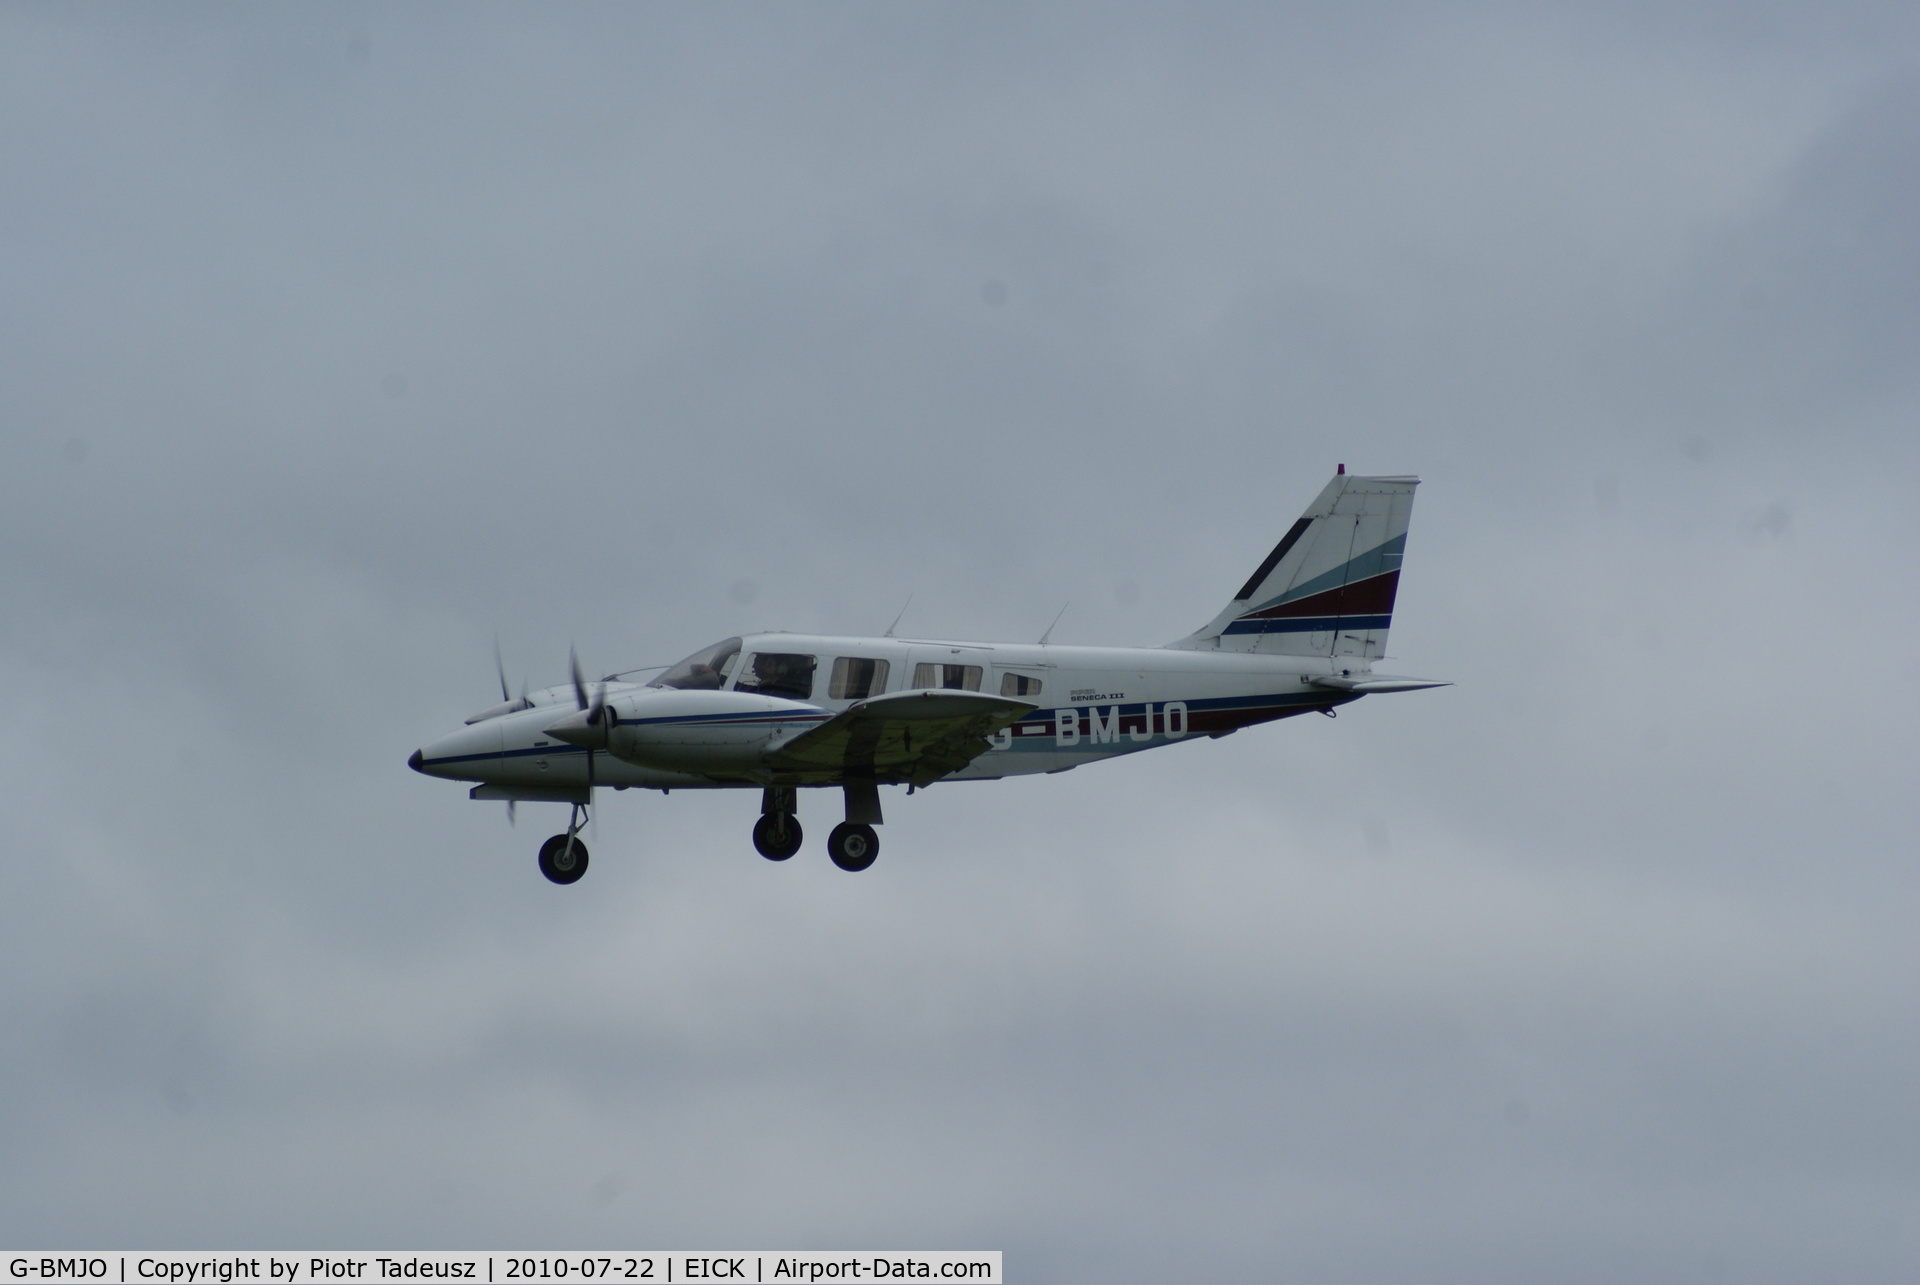 G-BMJO, 1985 Piper PA-34-220T Seneca III C/N 34-8533036, landing